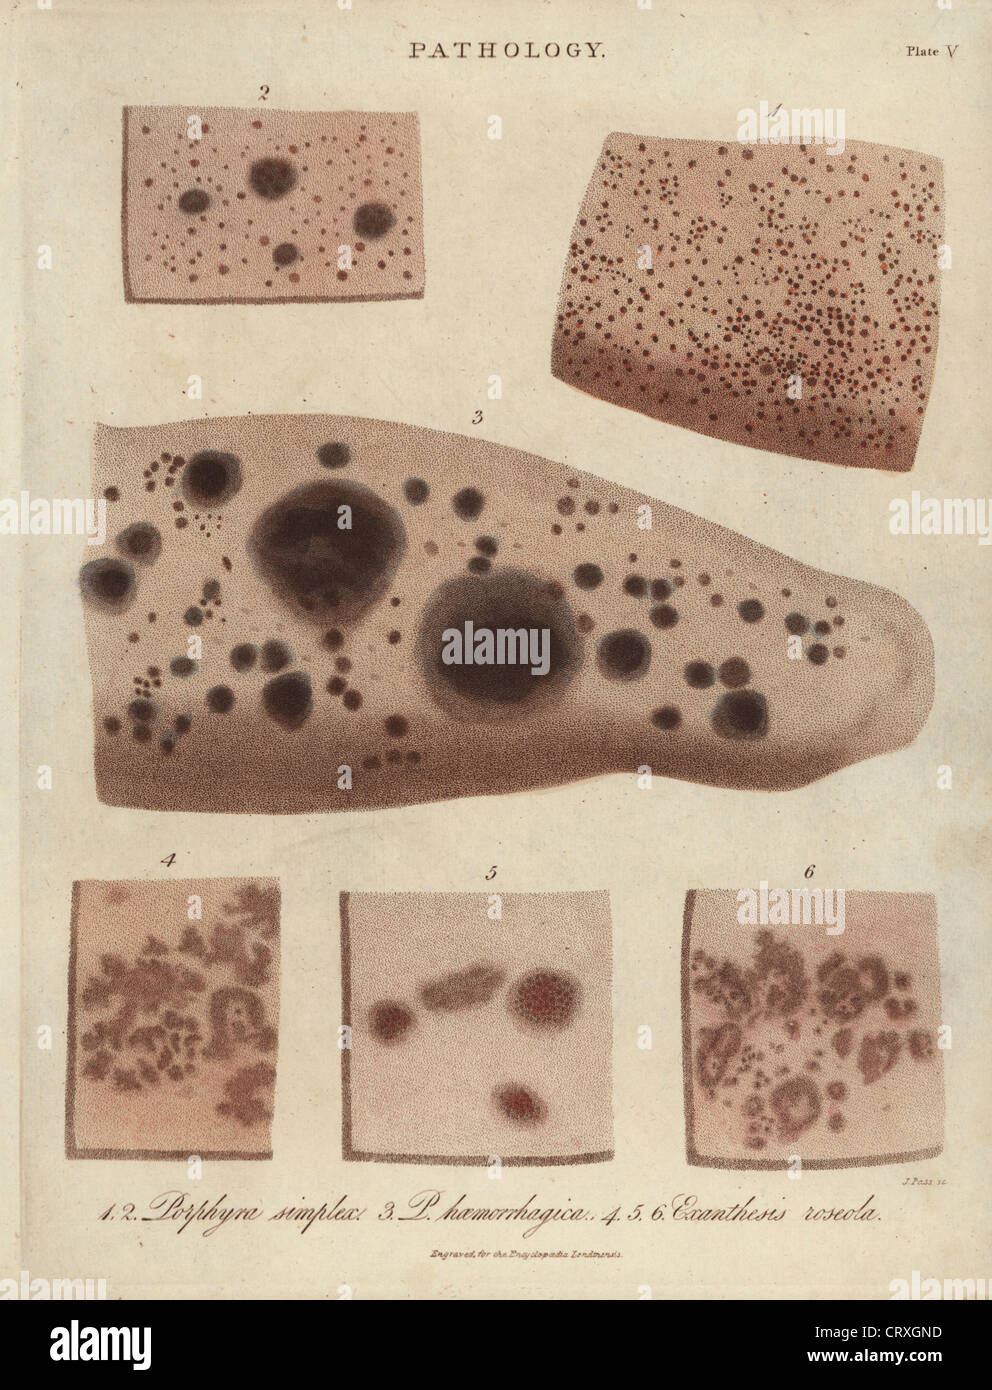 Skin diseases: Purple spots, Purpura simplex and P. haemorrhagica and rose rash, Exanthesis roseola. Stock Photo